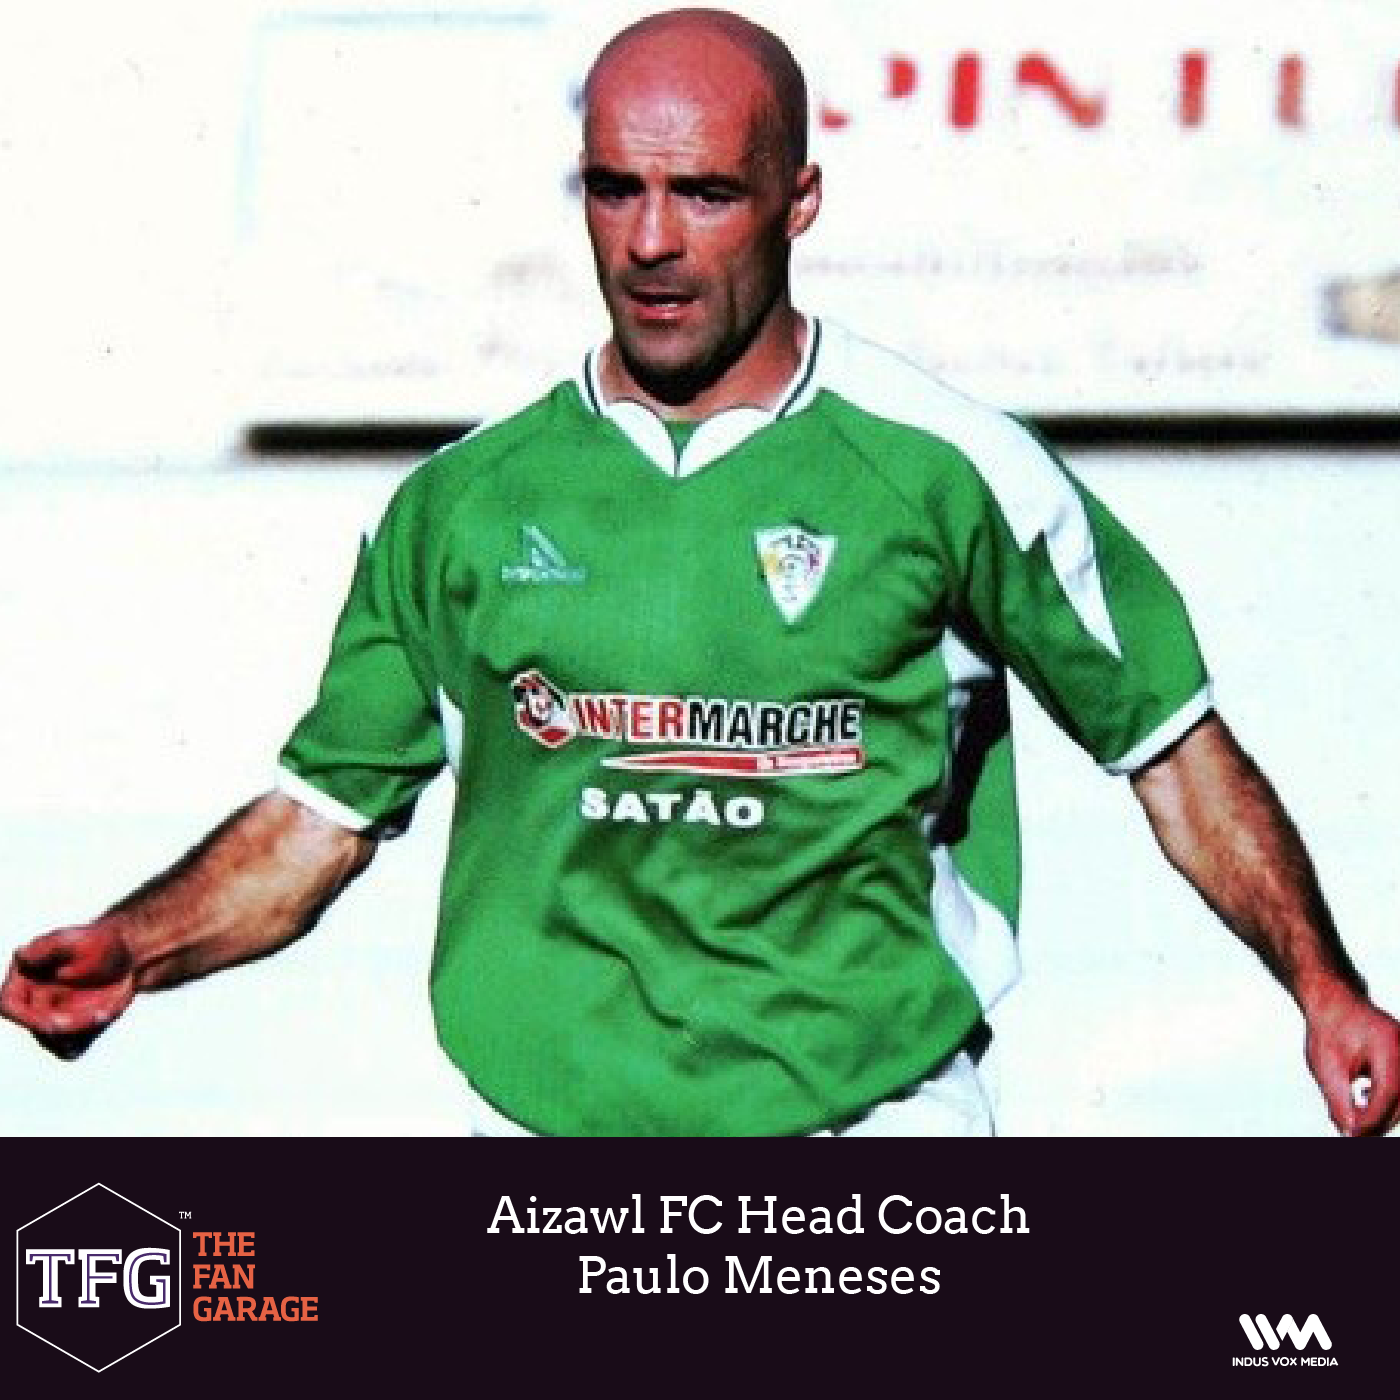 TFG interviews Ep. 032: Aizawl FC Head Coach Paulo Meneses